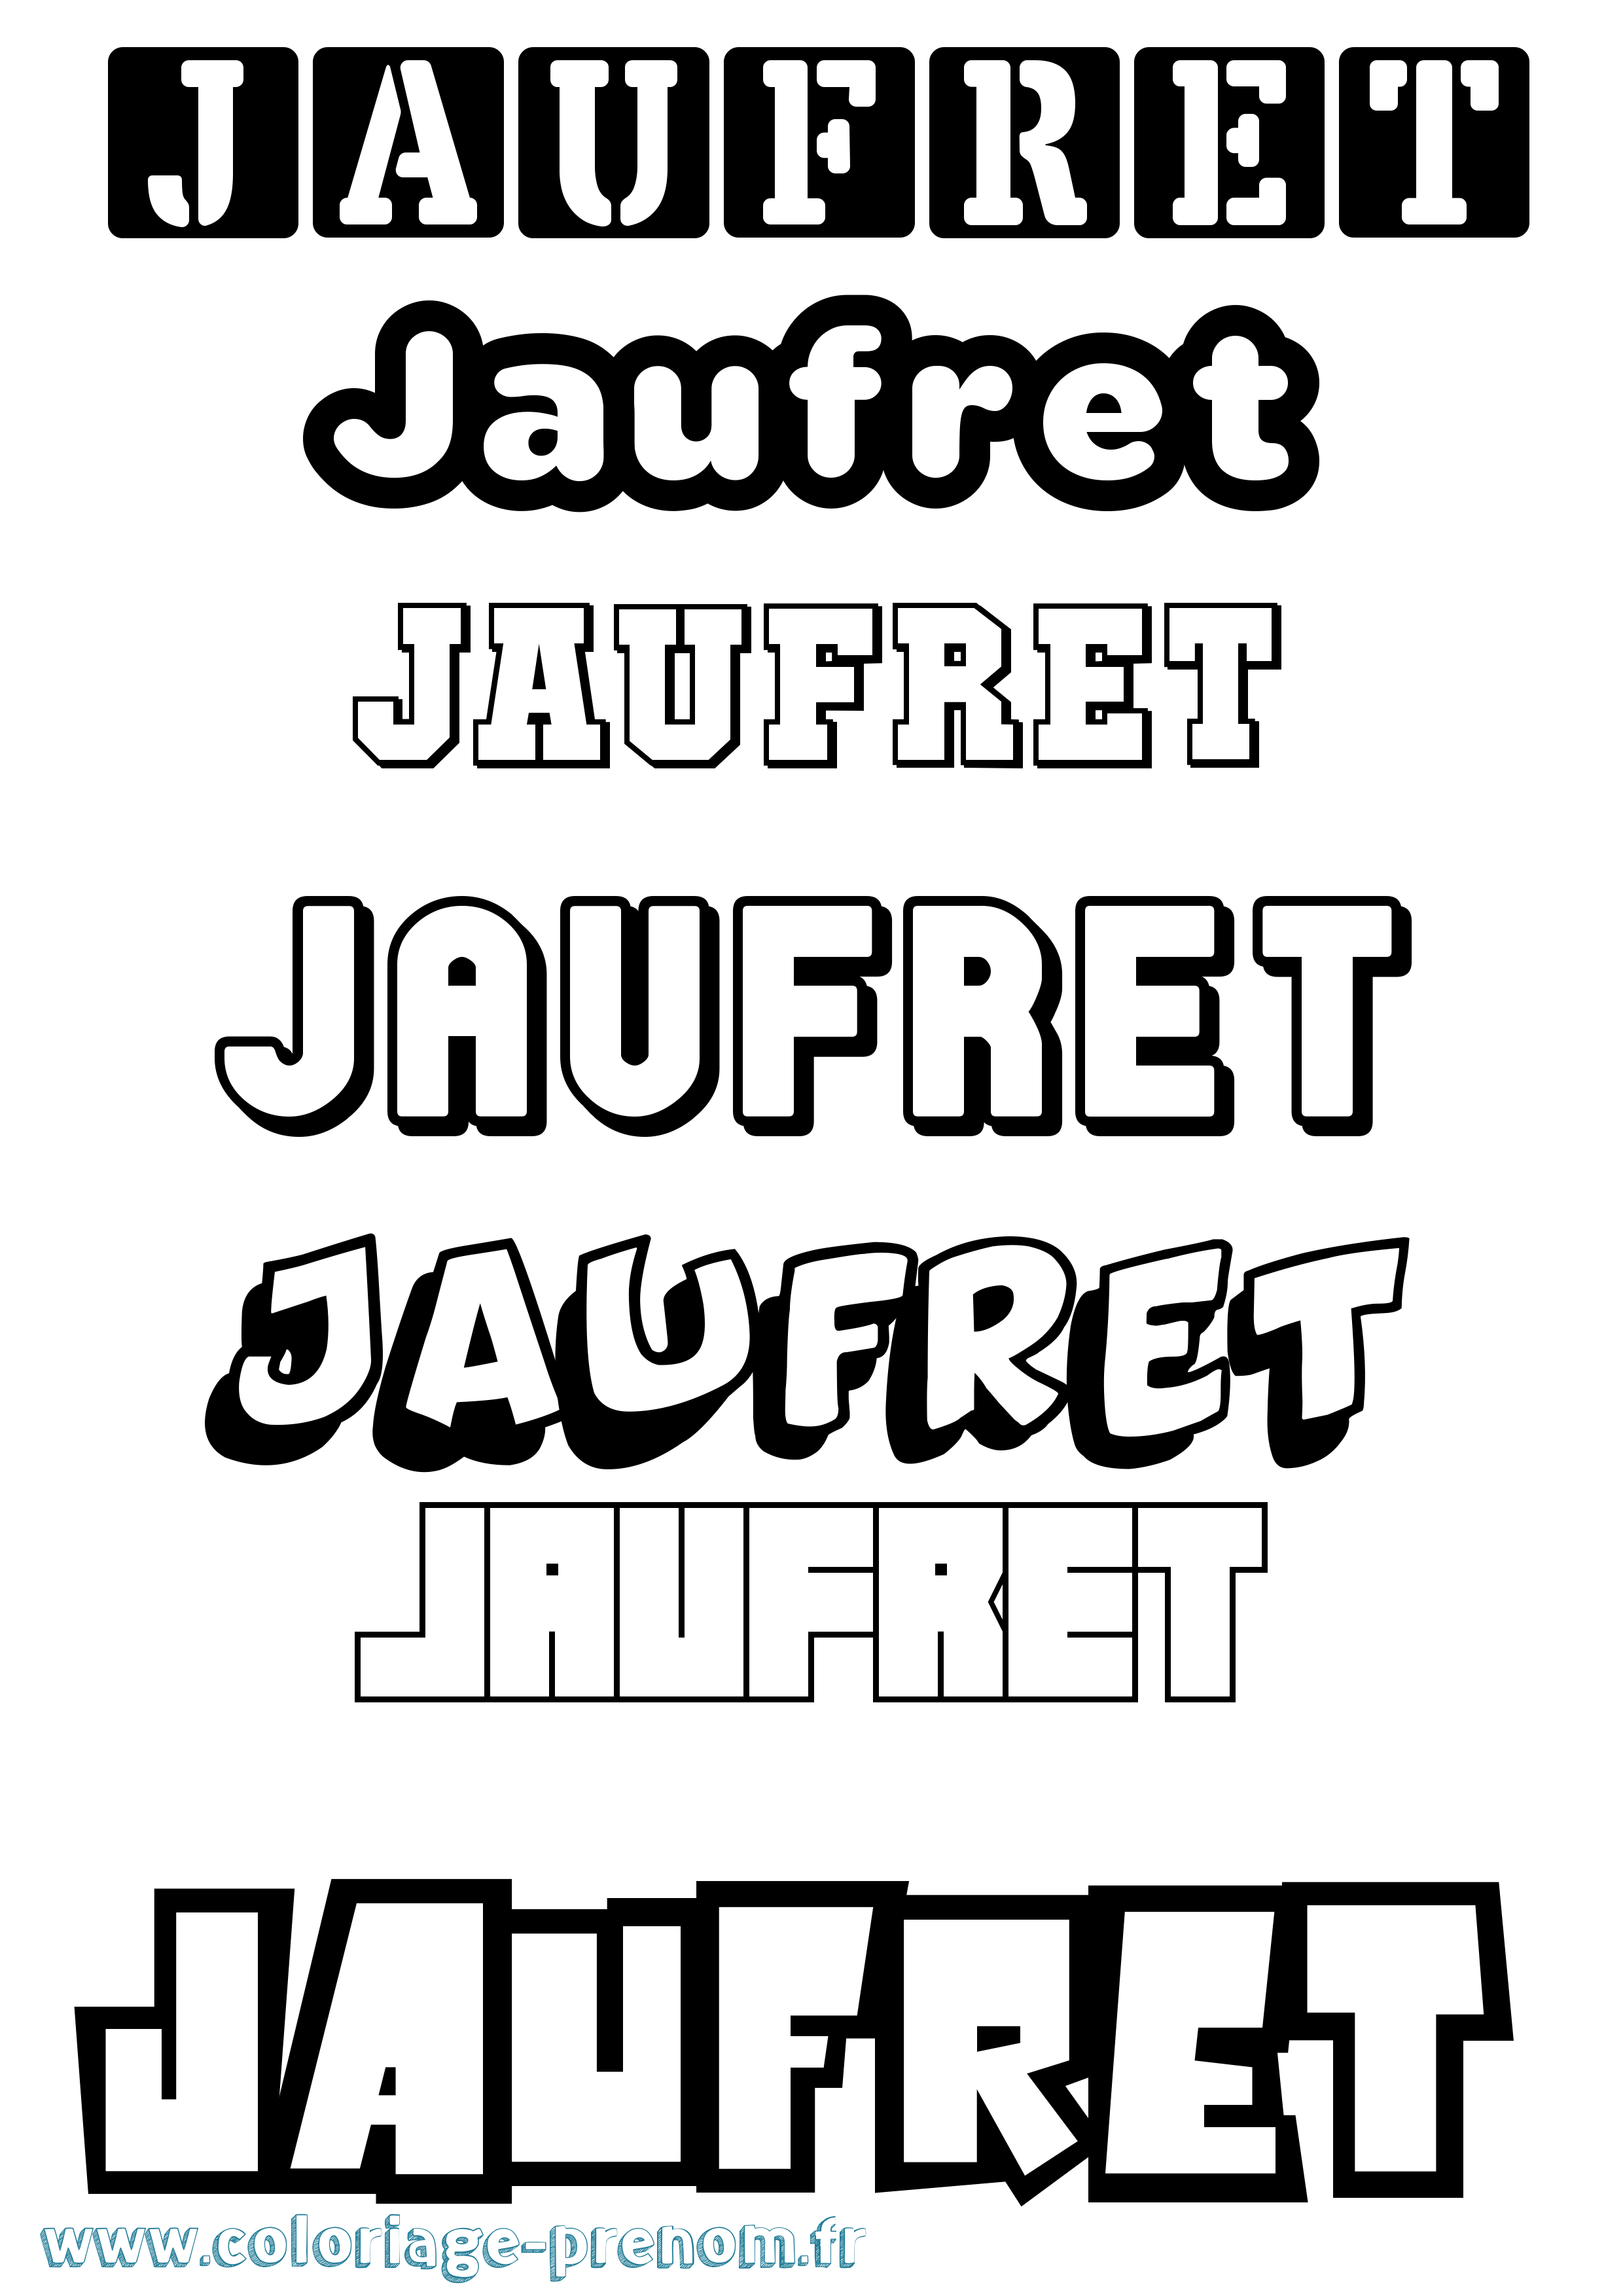 Coloriage prénom Jaufret Simple